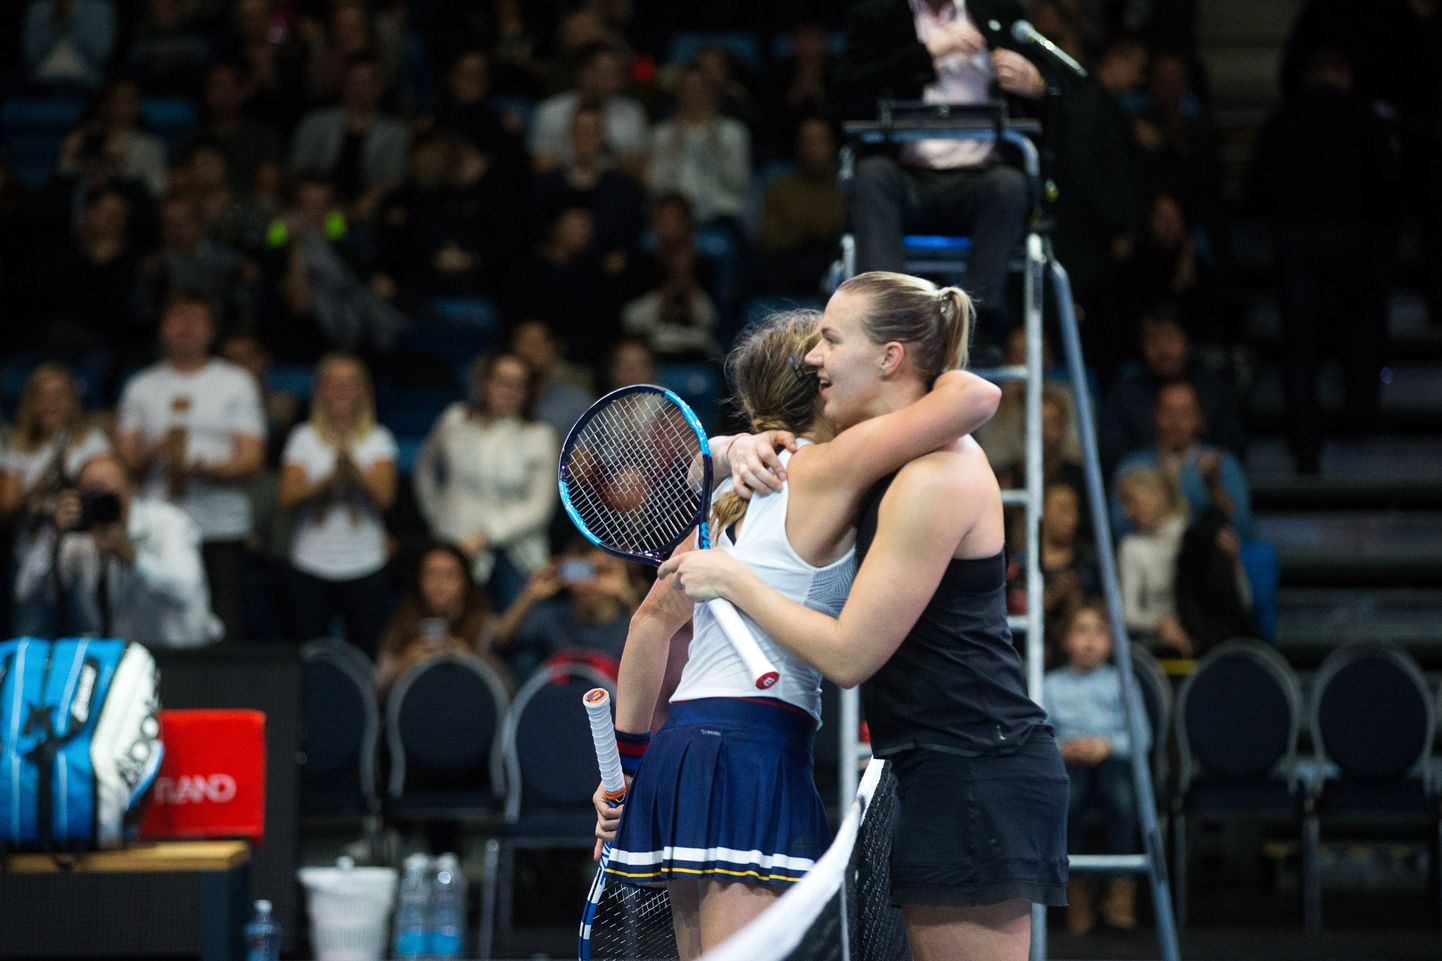 Eesti parimad naistennisistid Anett Kontaveit ja Kaia Kanepi paiknevad WTA edetabelis esisajas.